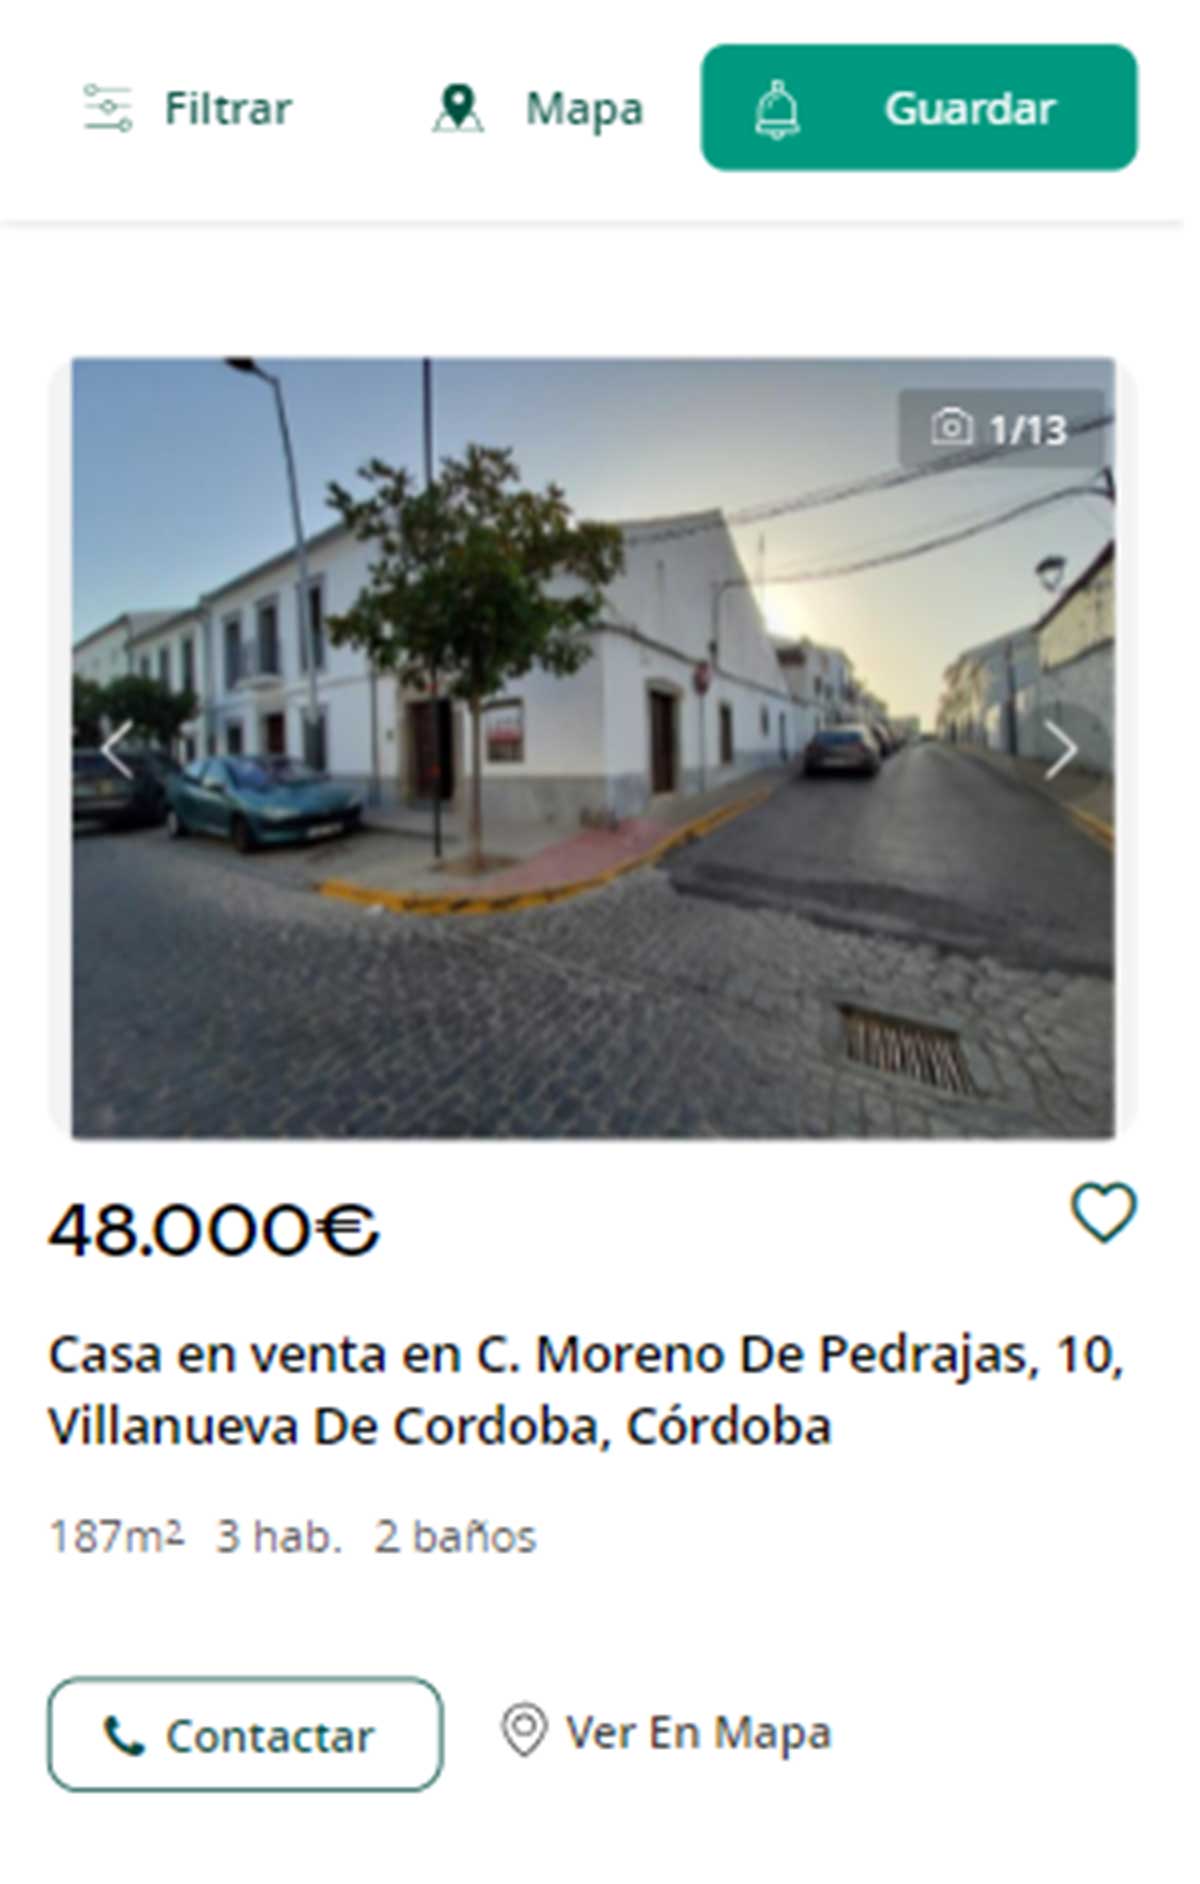 Piso a la venta en Córdoba por menos de 50.000 euros